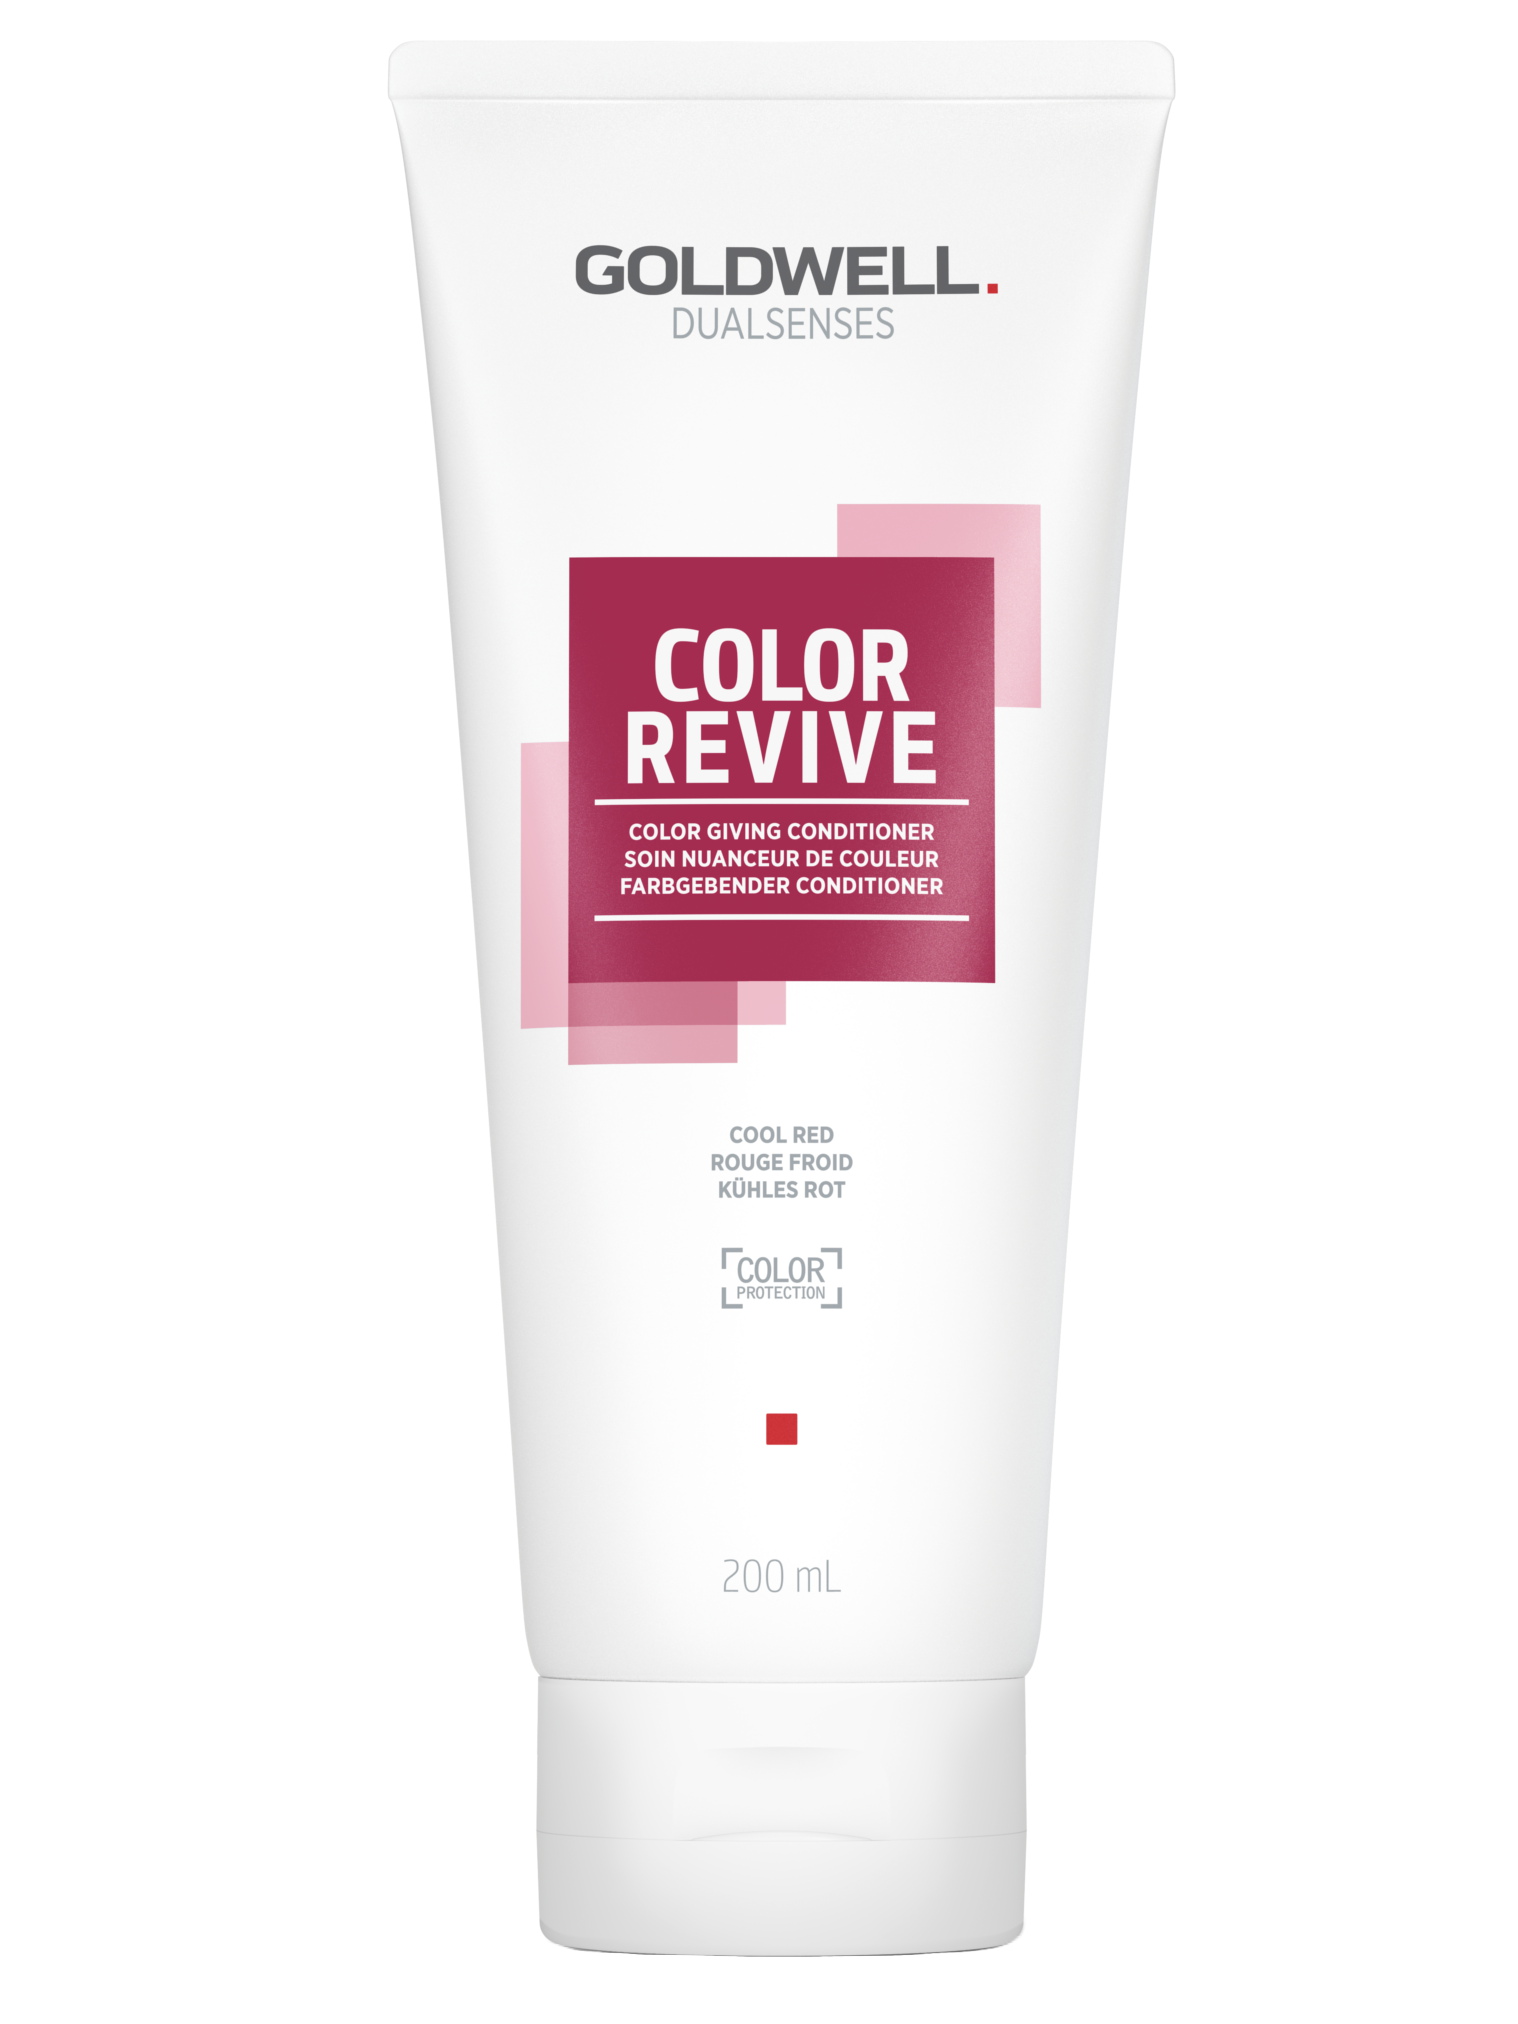 Kondicionér pro oživení barvy vlasů Goldwell Color Revive - 200 ml, červenofialová (205630) + dárek zdarma